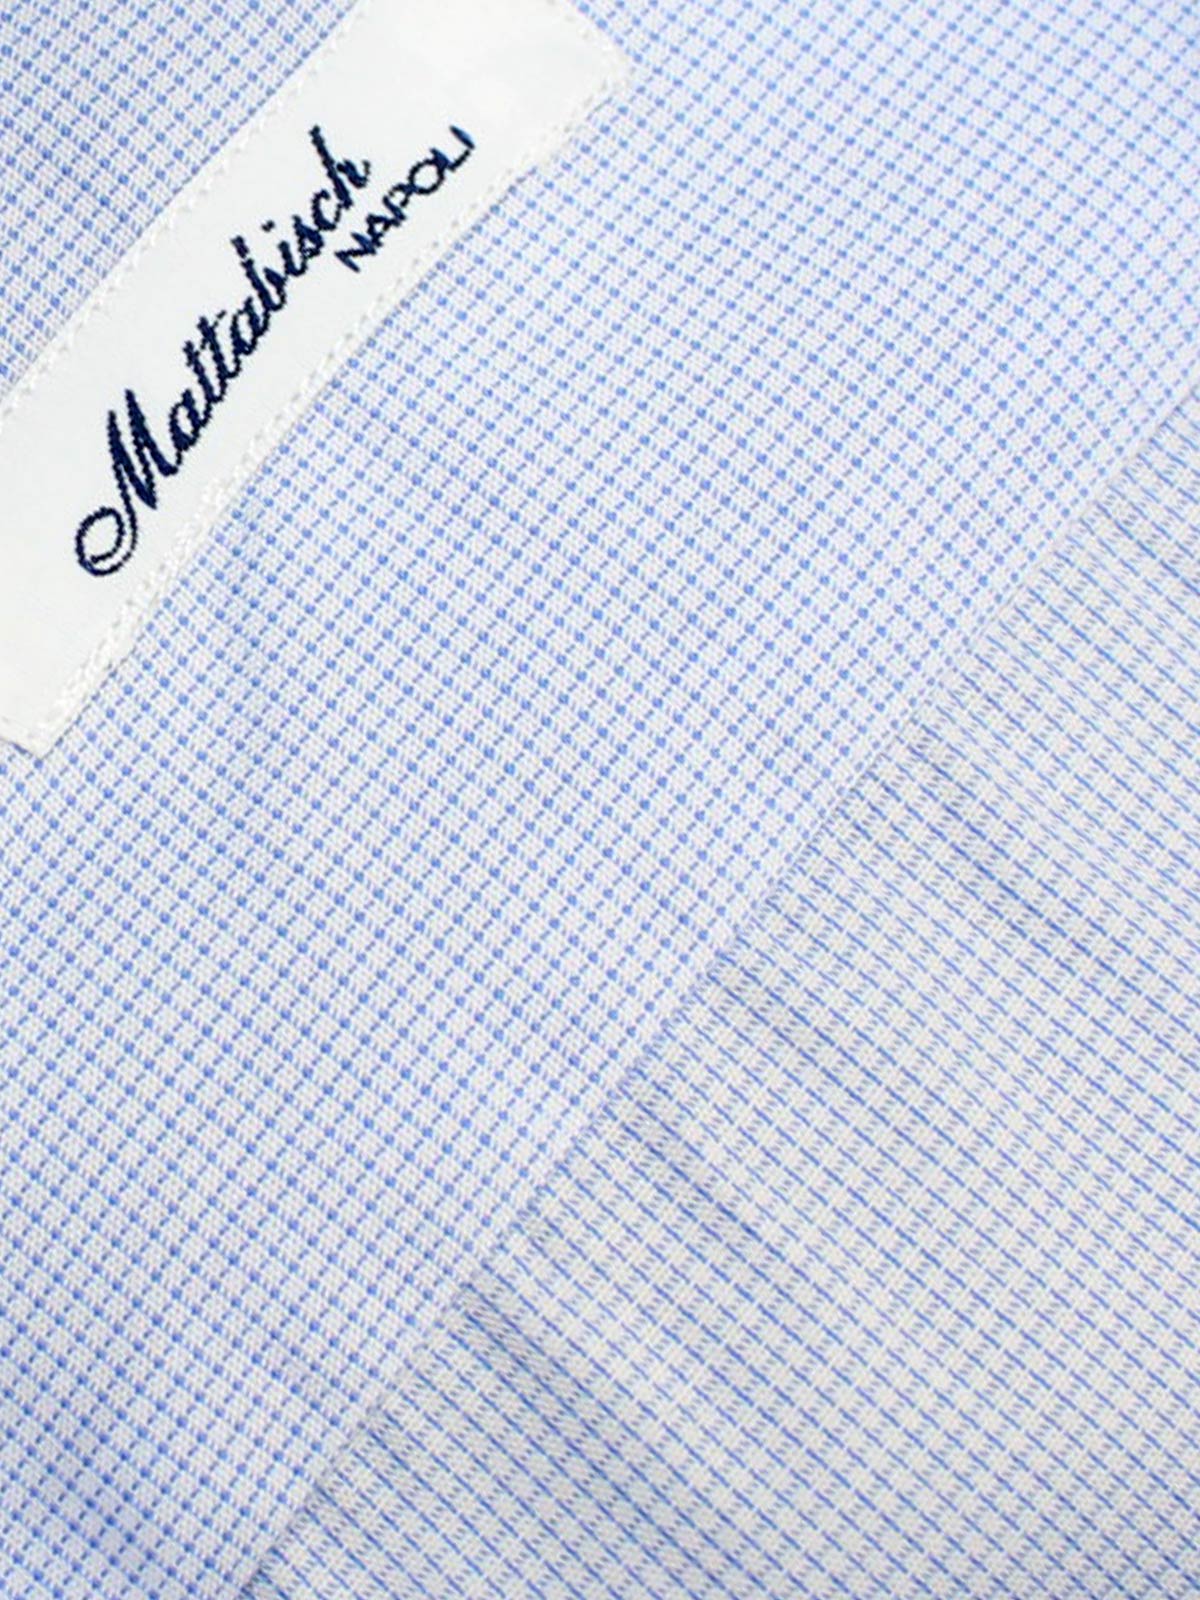 Mattabisch Napoli Shirt White Blue Micro Check